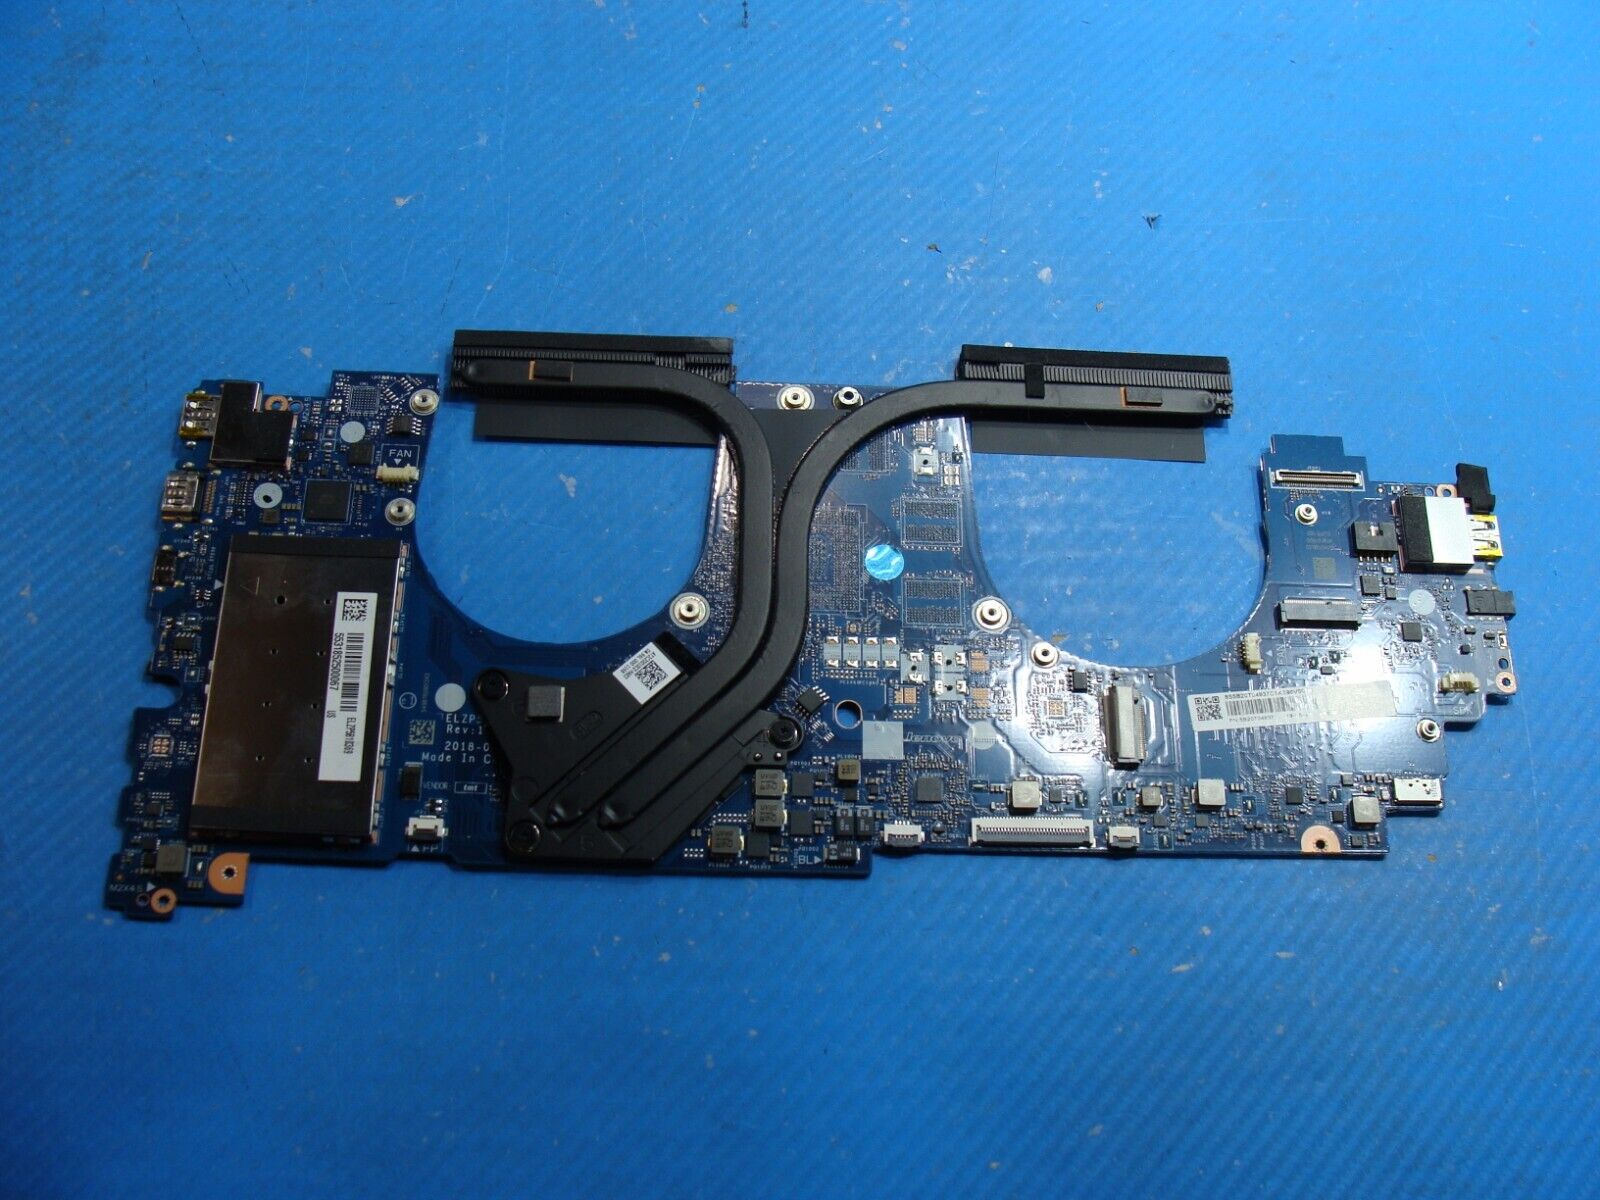 Lenovo Yoga 730-15IWL 15.6 Intel i7-8565U 1.8GHz 8GB Motherboard 5B20T04937